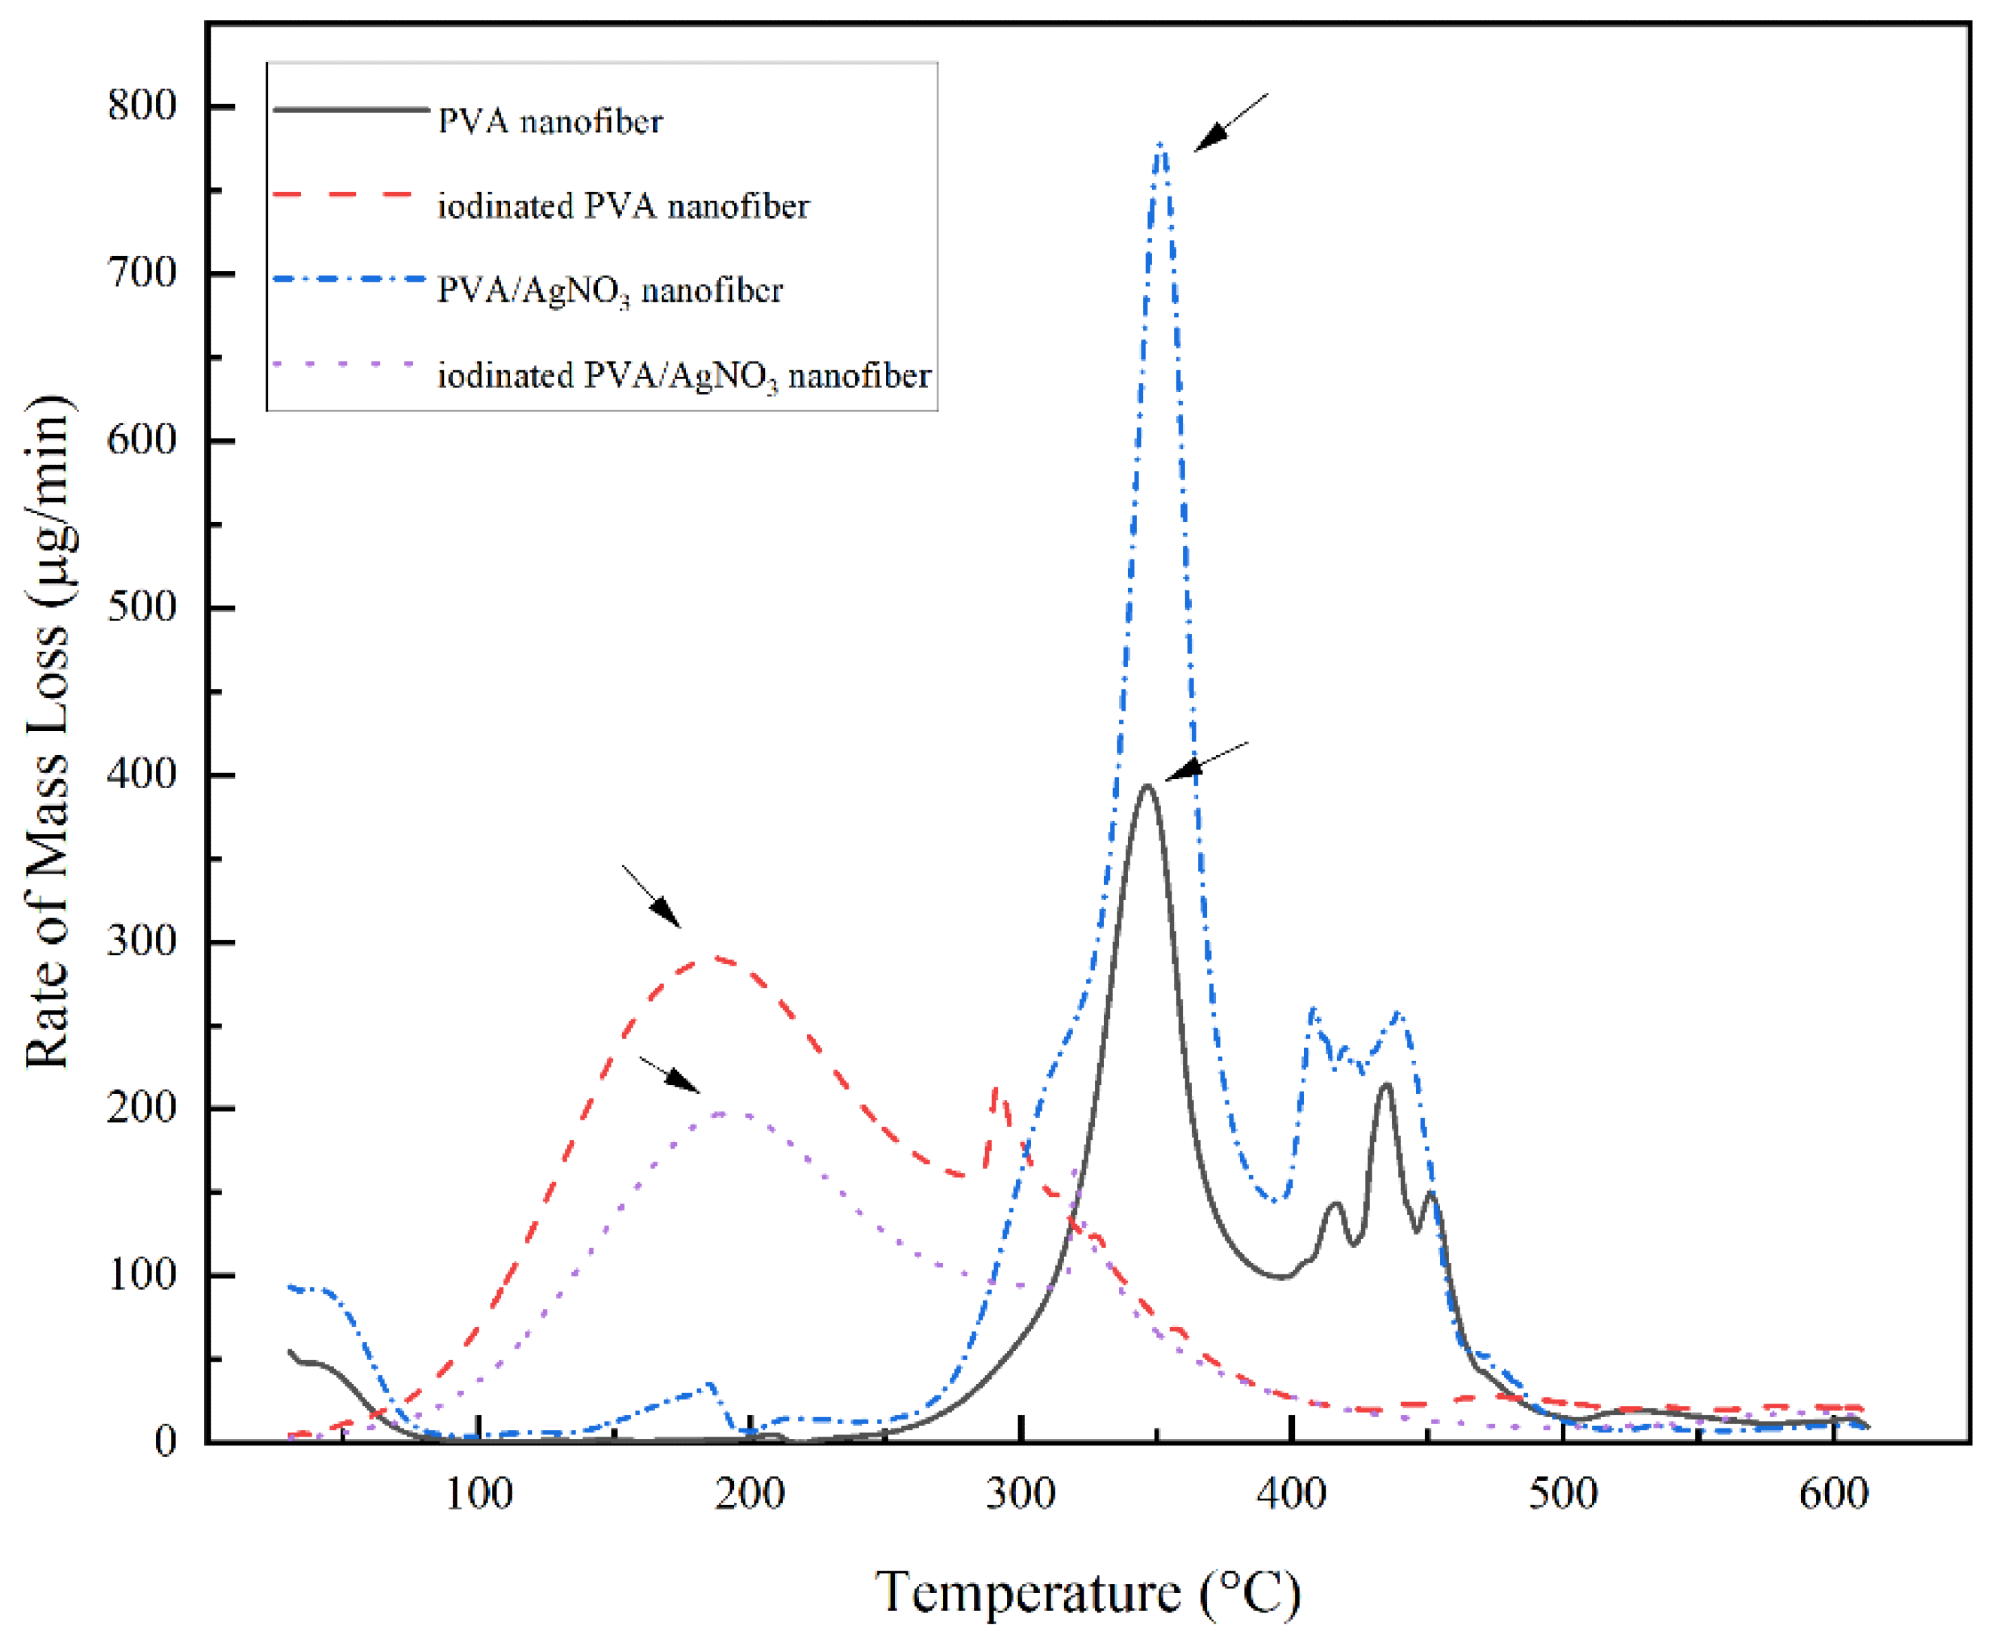 DTG thermogram of PVA Nanofiber, Iodinated PVA Nanofiber, PVA/AgNO3 Nanofiber, and Iodinated PVA/AgNO3 Nanofiber.